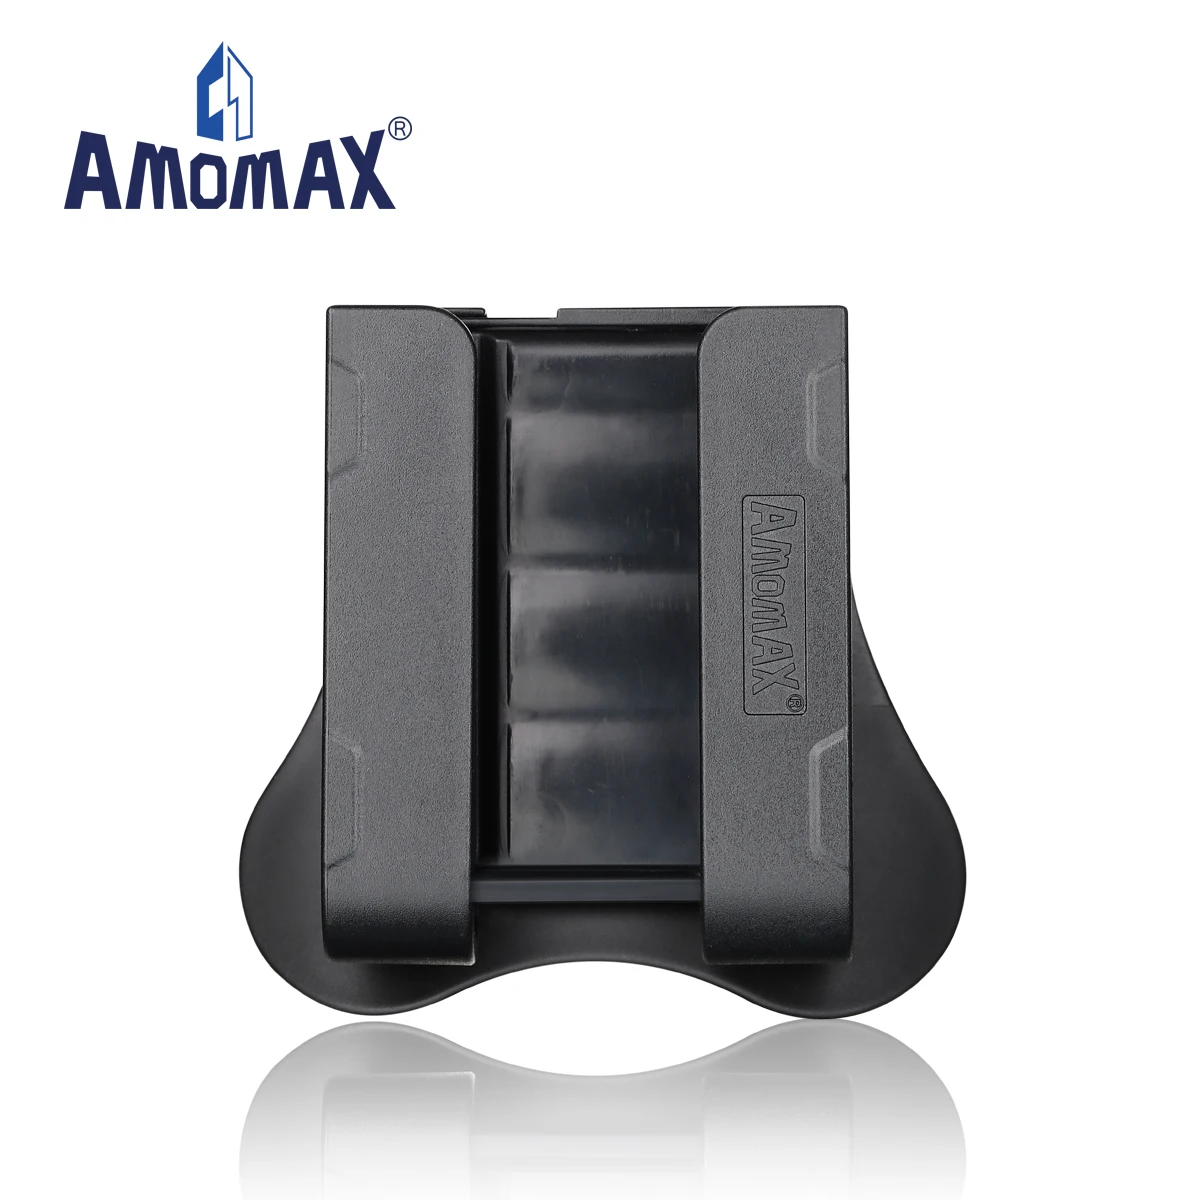 

Amomax Cytac Plastic Tactical Universal 4 Rounds 12 GA Shotgun Shell Holder Gun Magazine Pouch for Shooting Hunting Self Defense, Black